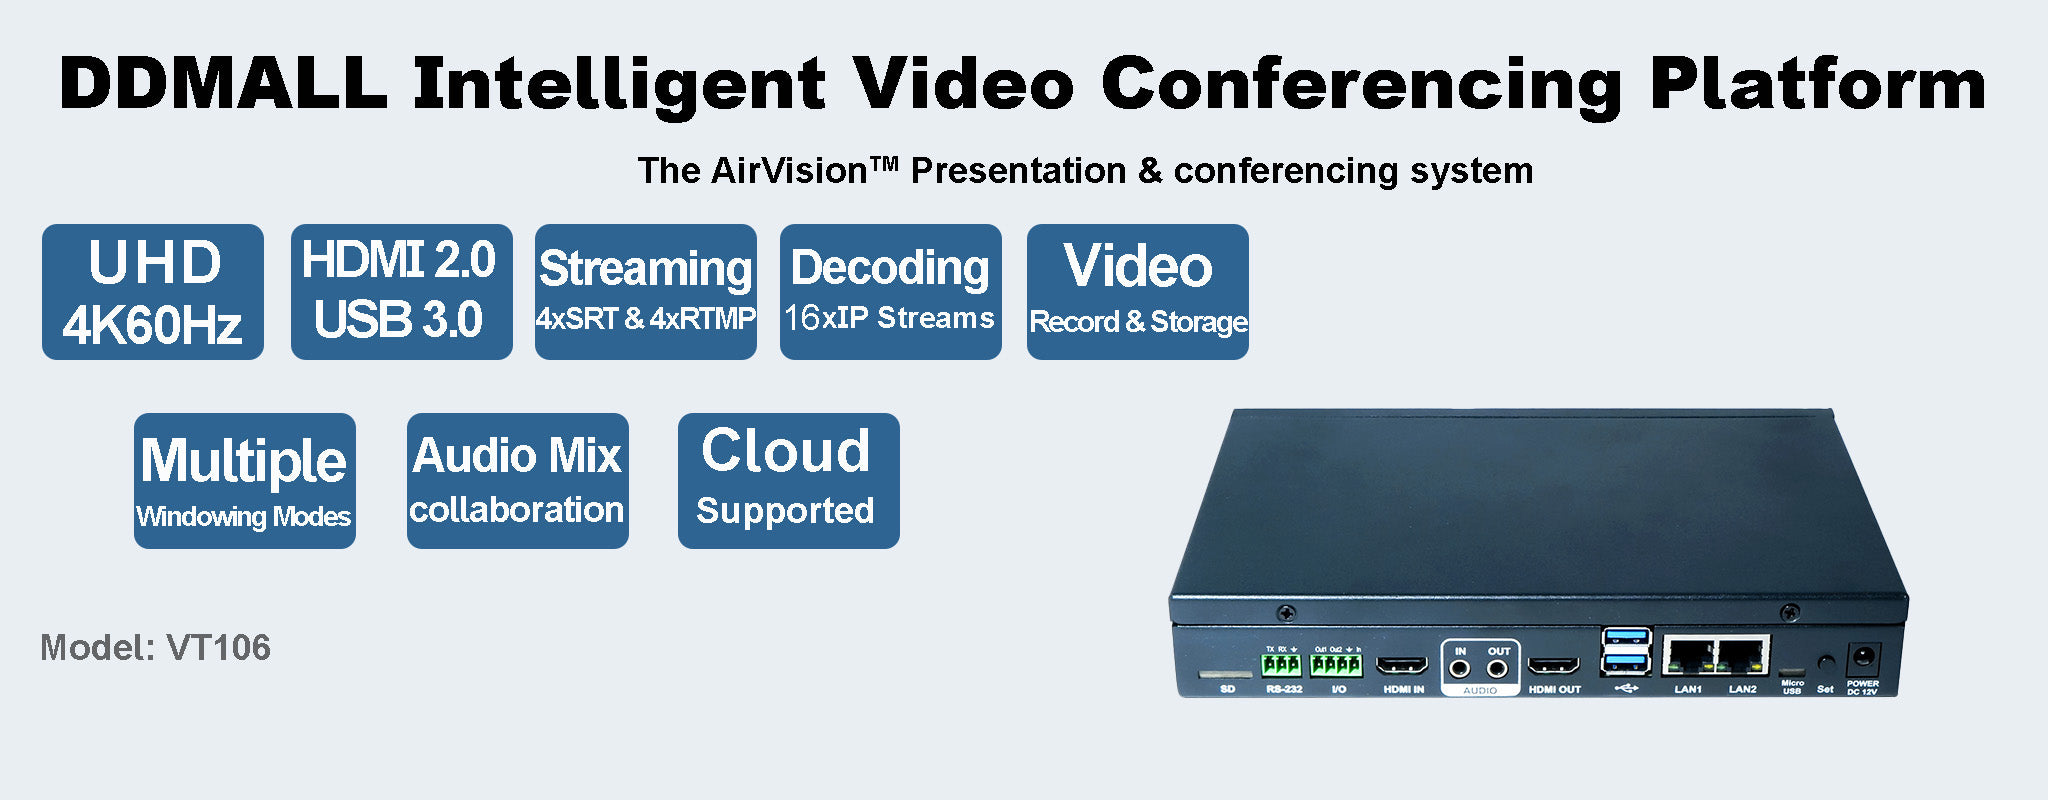 DDMALL Intelligent Video Conferencing Platform VT106